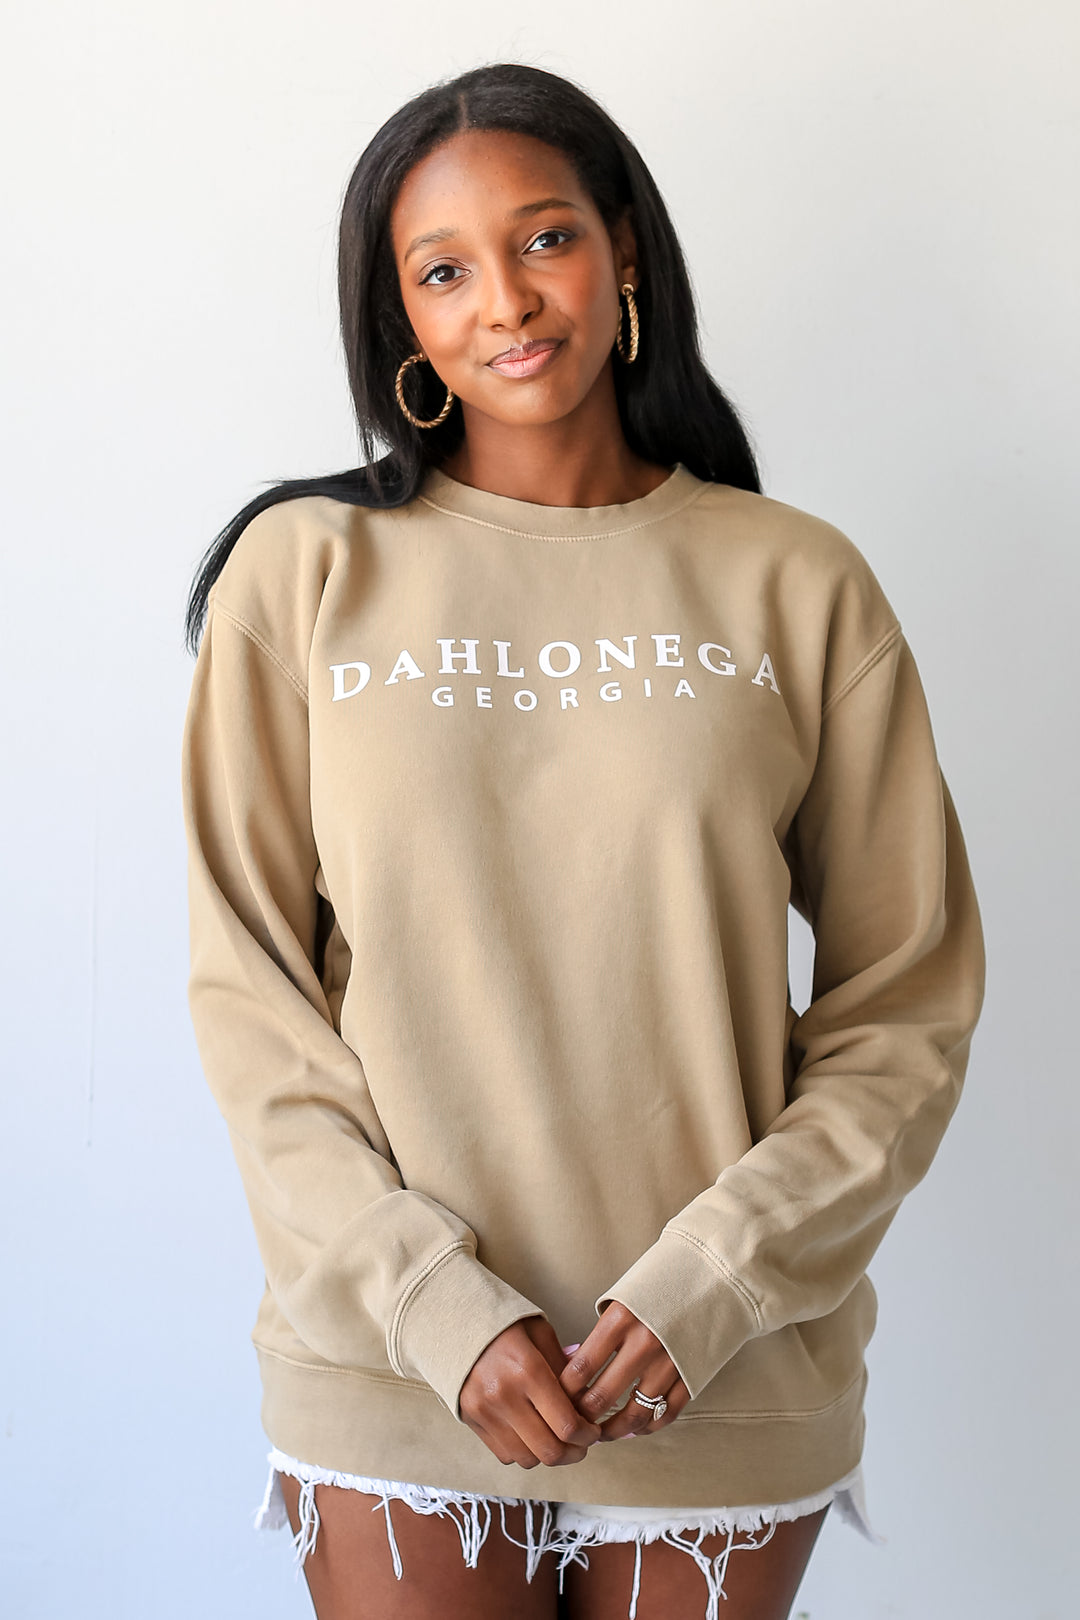 Tan Dahlonega Georgia Pullover. Comfy Sweatshirt Womens. Graphic Sweatshirt